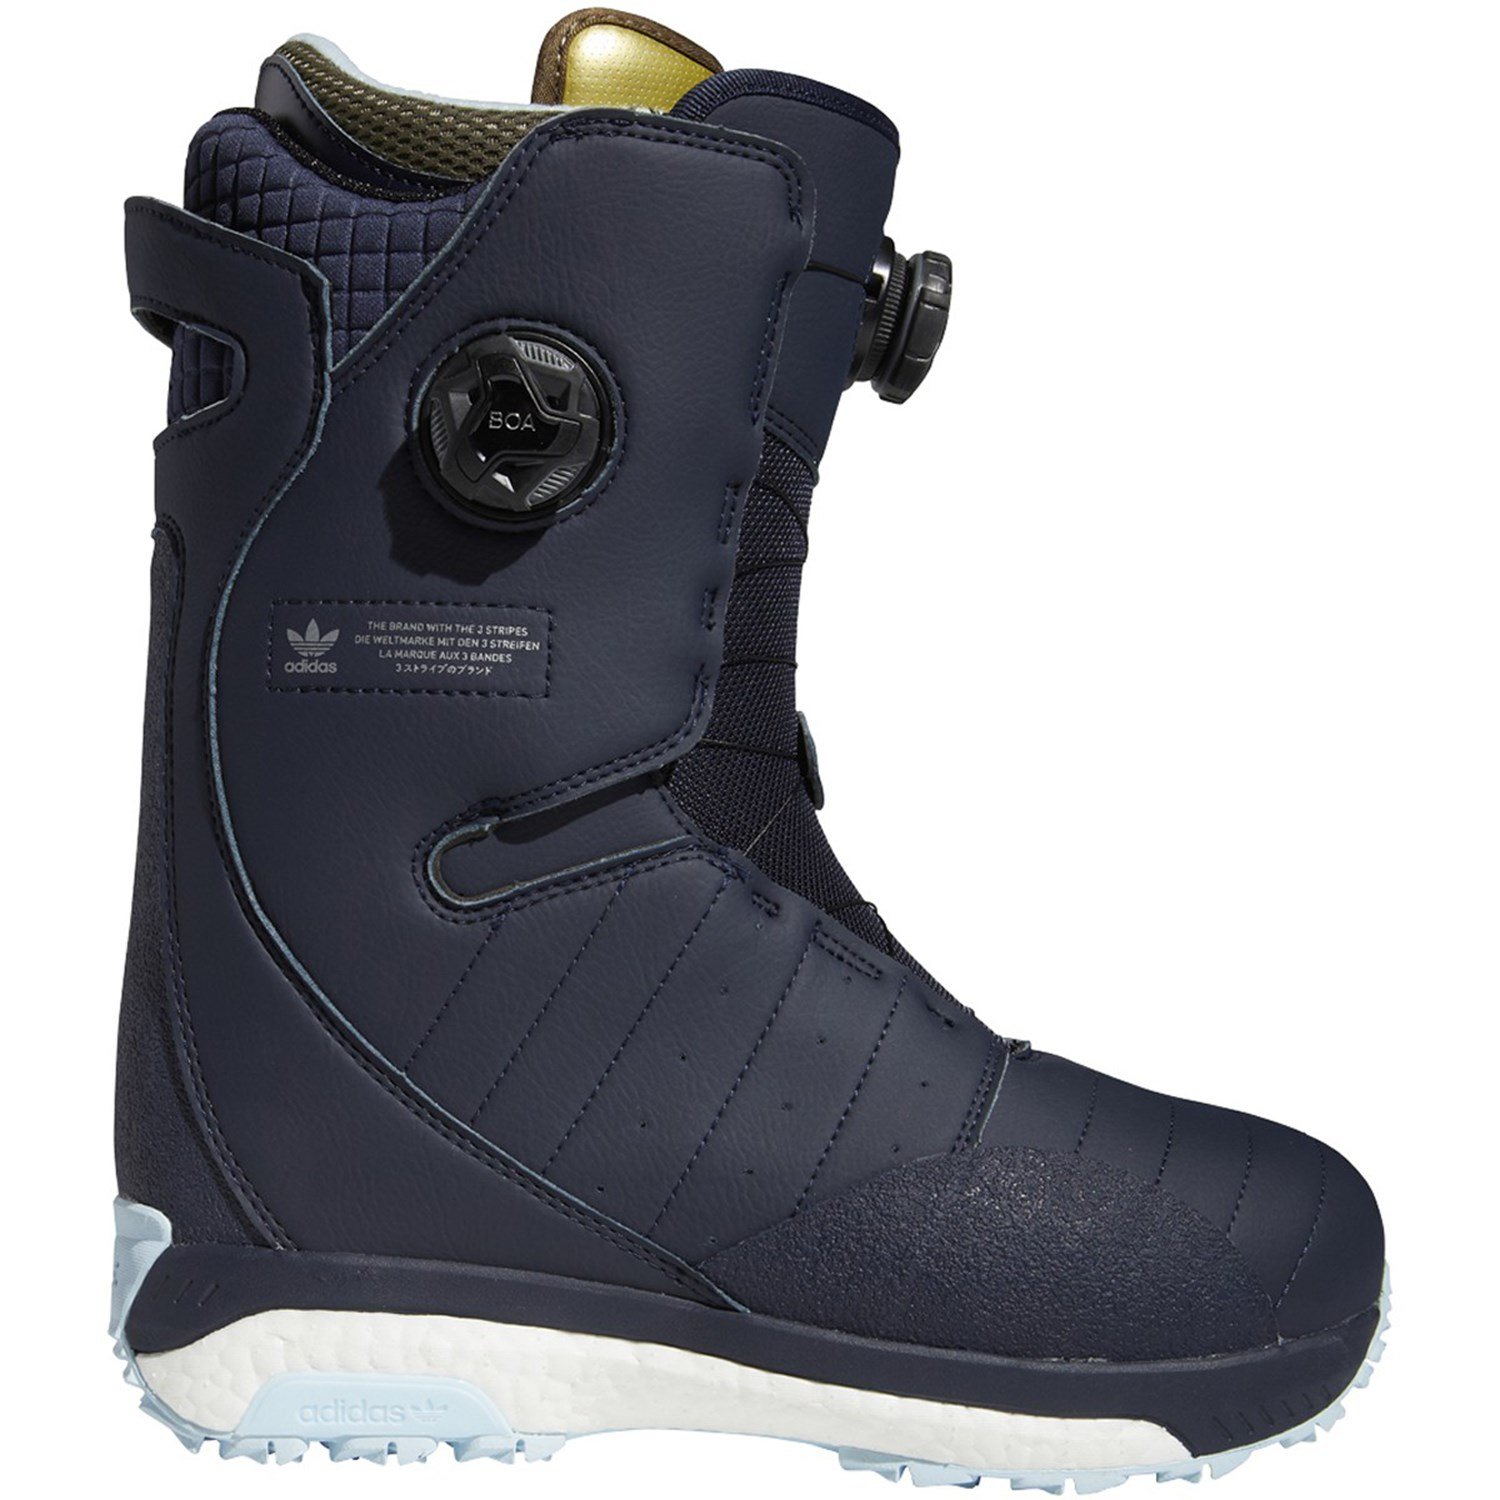 2021 adidas snowboard boots